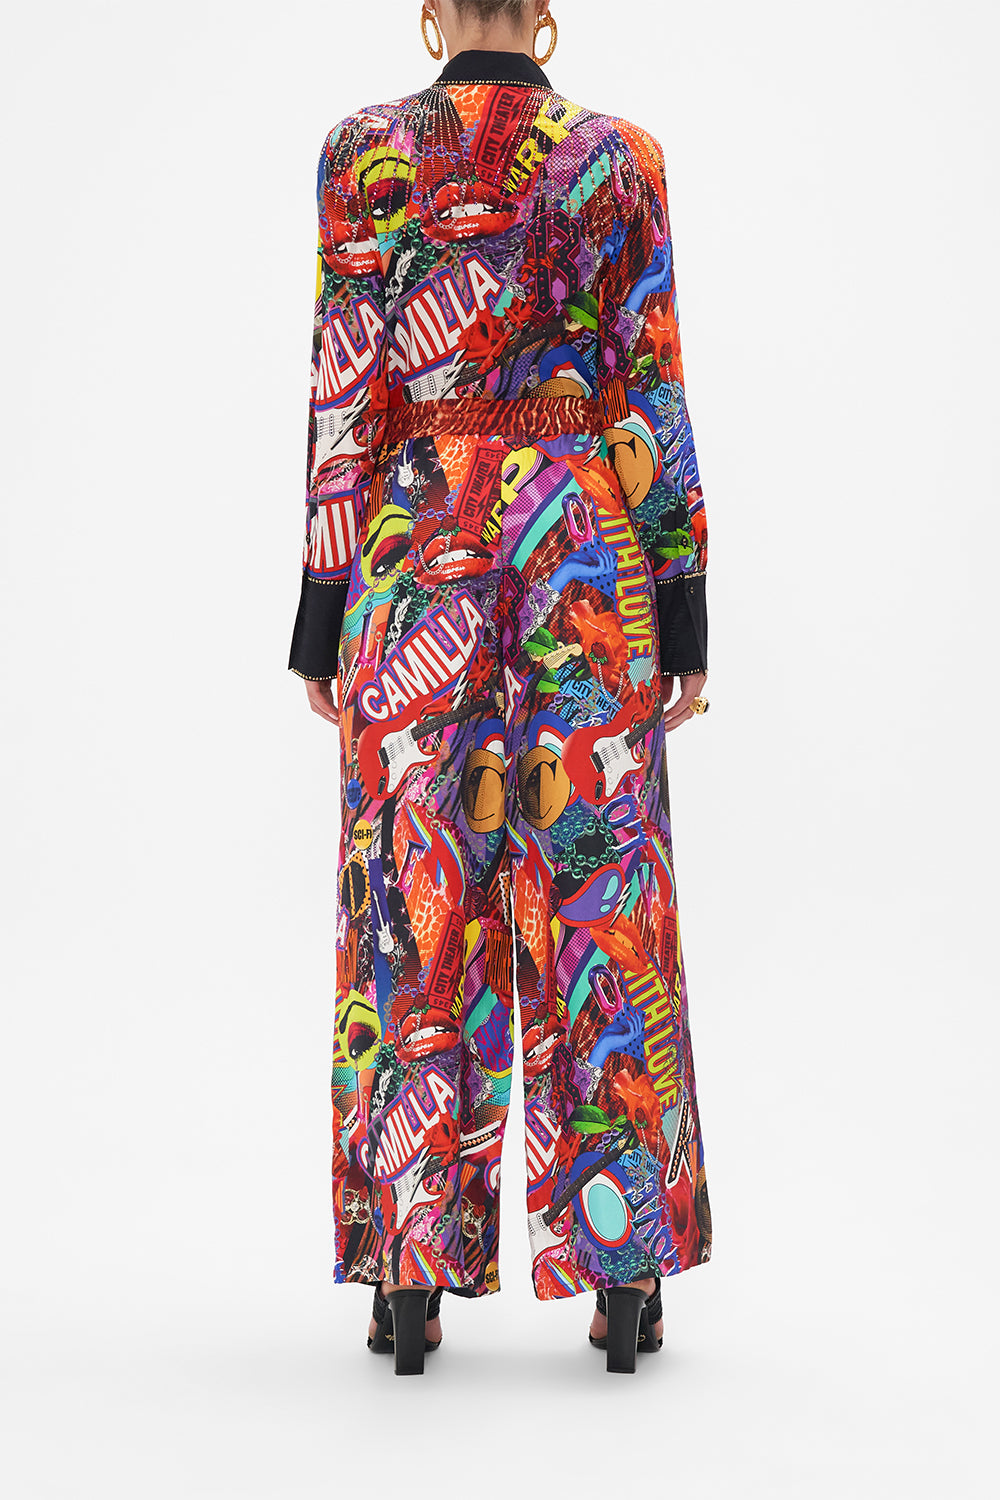 Back view of model wearing CAMILLA silk palazzo pants in multicoloured Radical Rebirth print